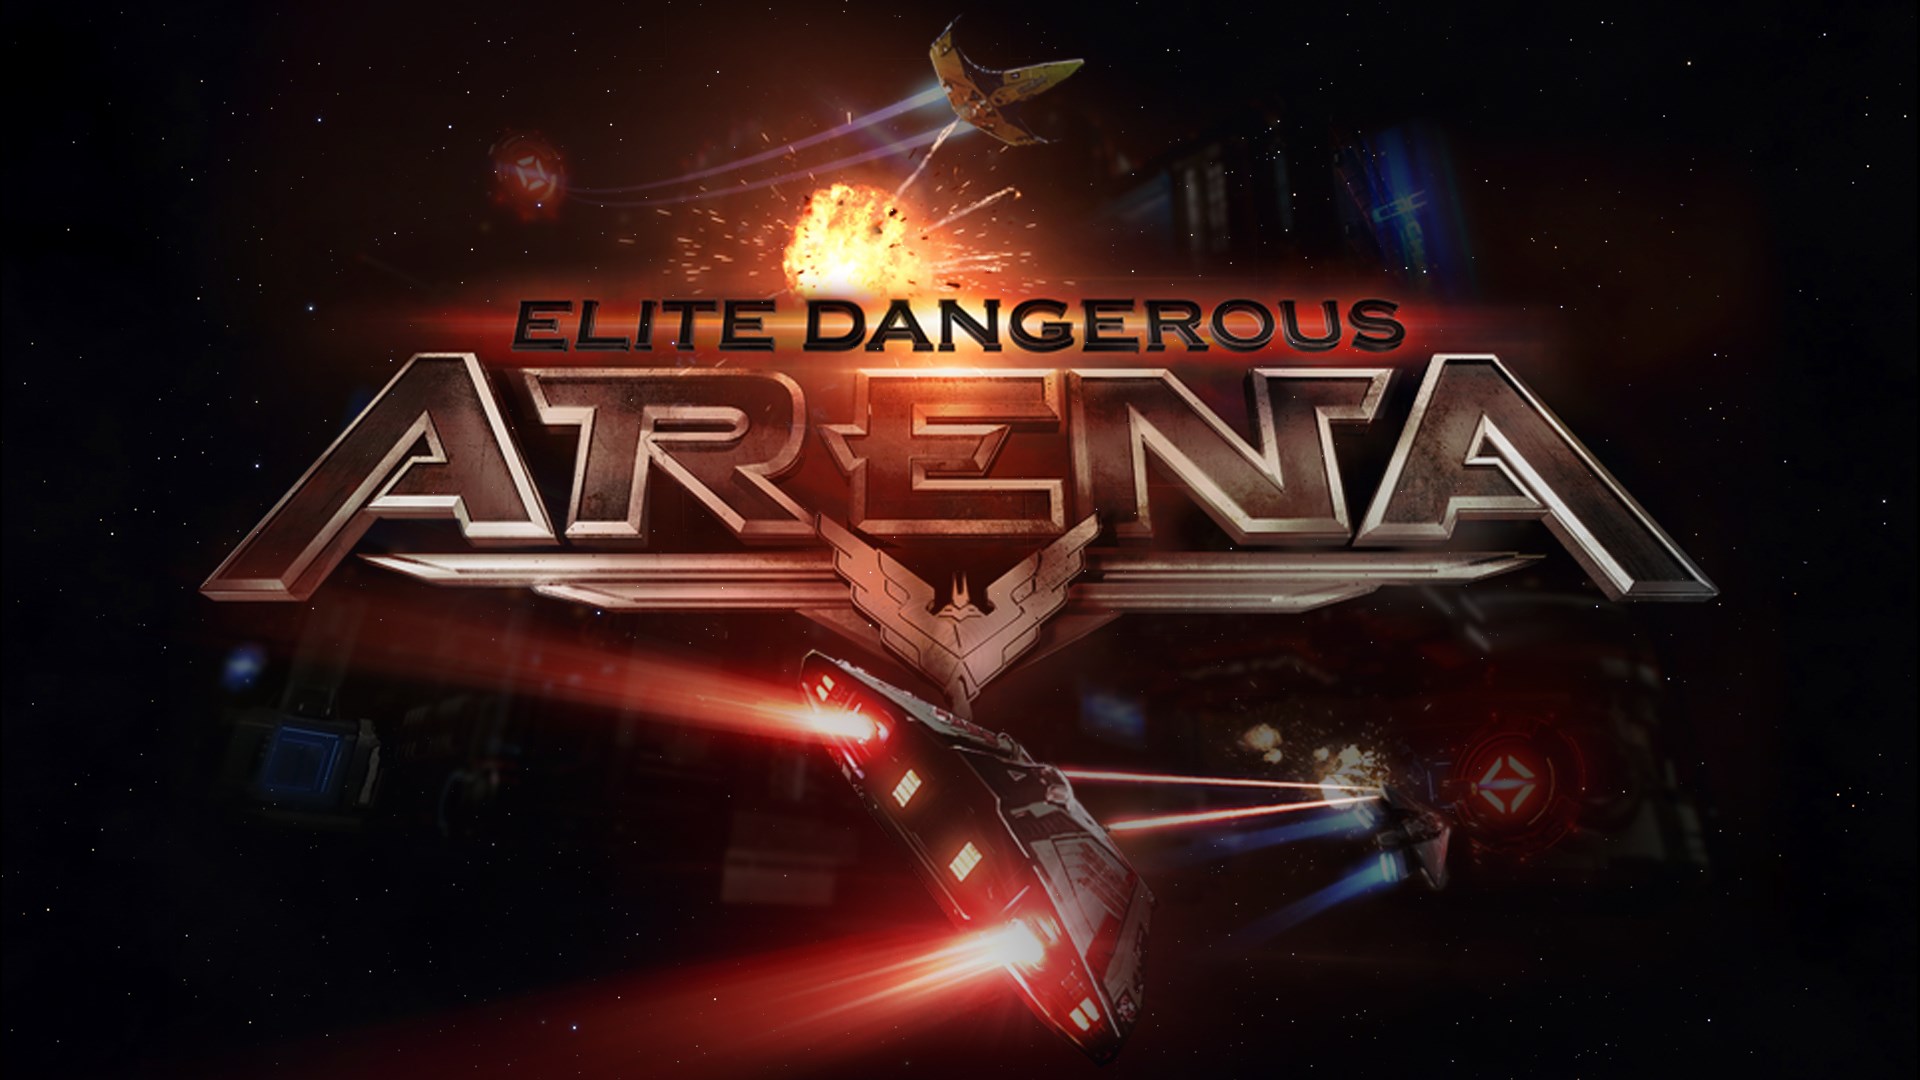 Elite: Dangerous Makes One Player $15,000 - GameSpot